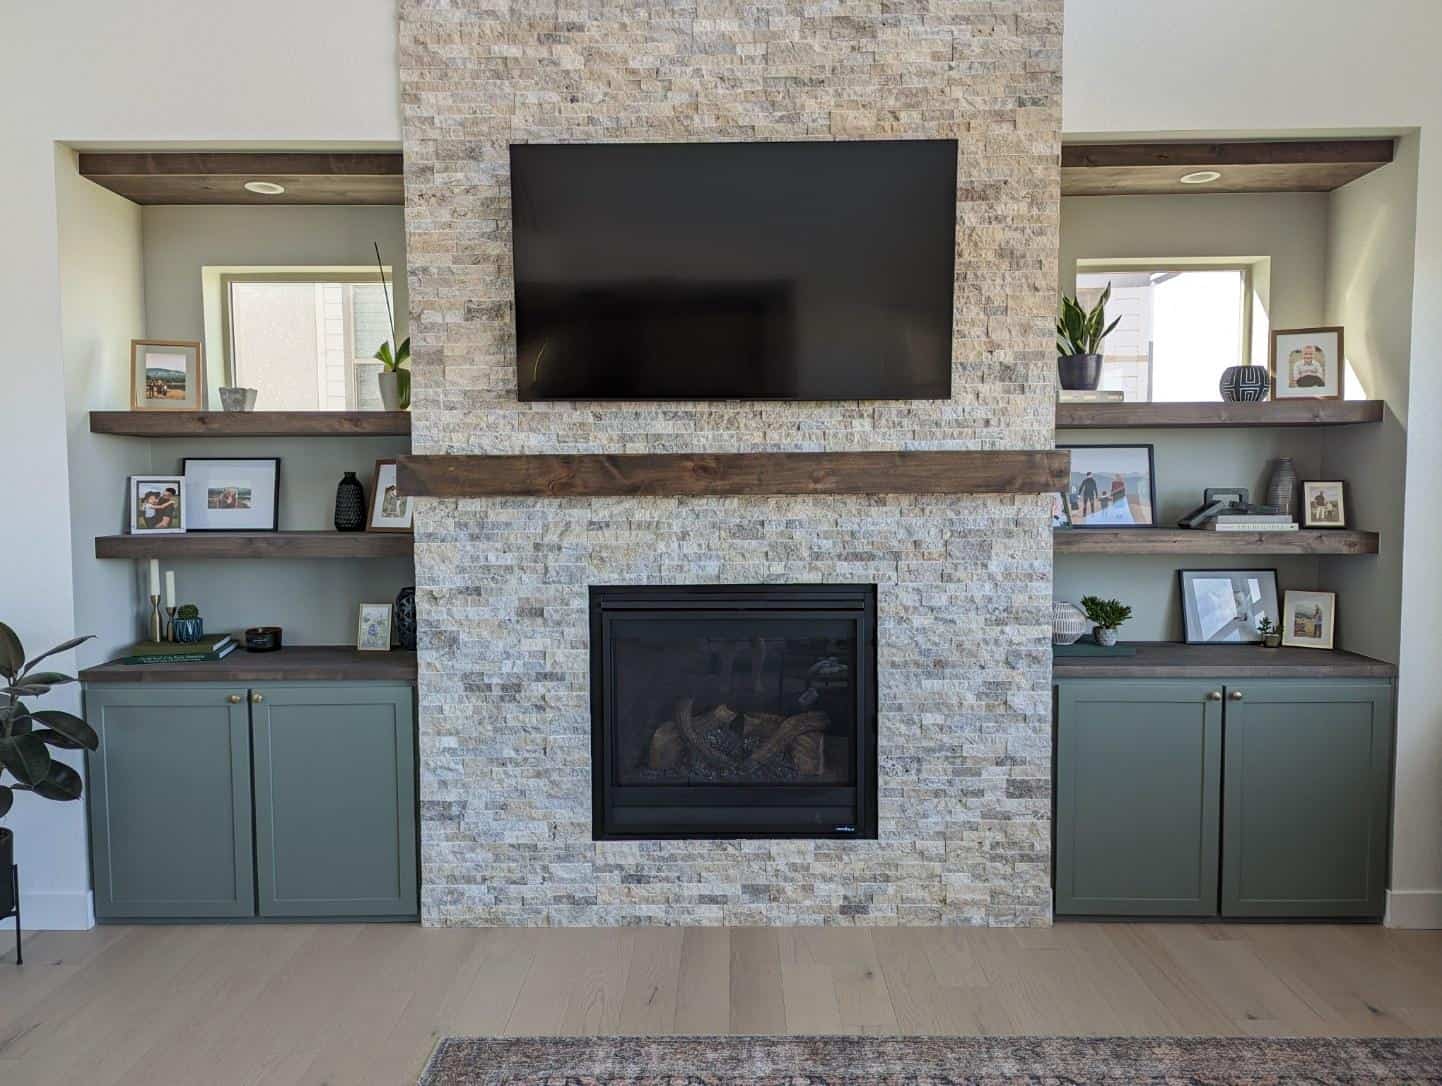 custom built-ins and shelving surrounding a brick fireplace